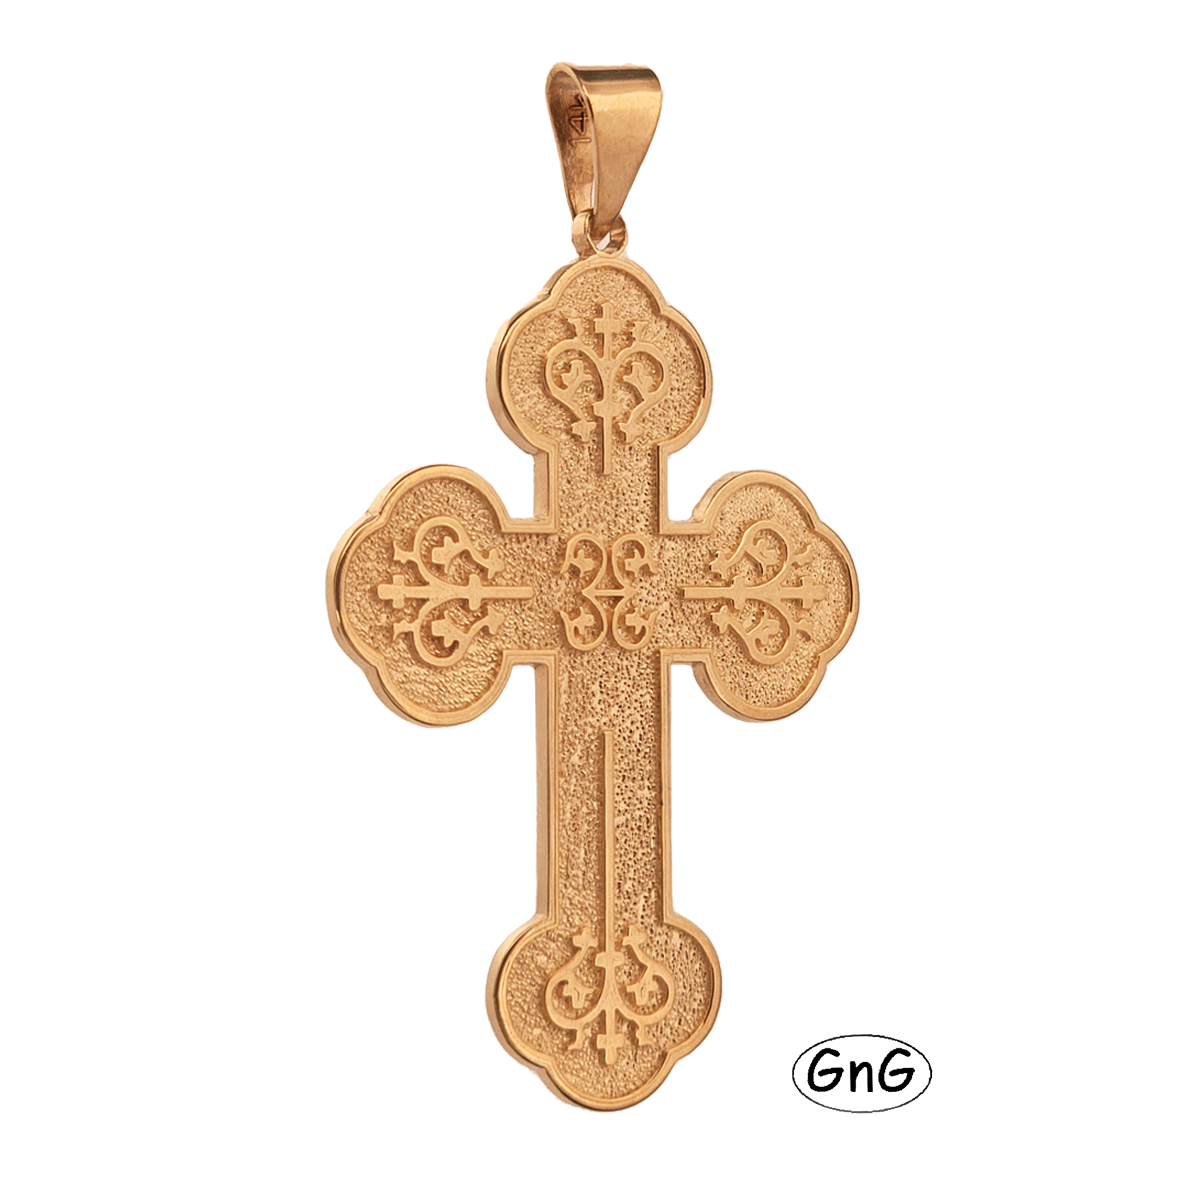 GE38, Gold Orthodox Cross, GnG Design